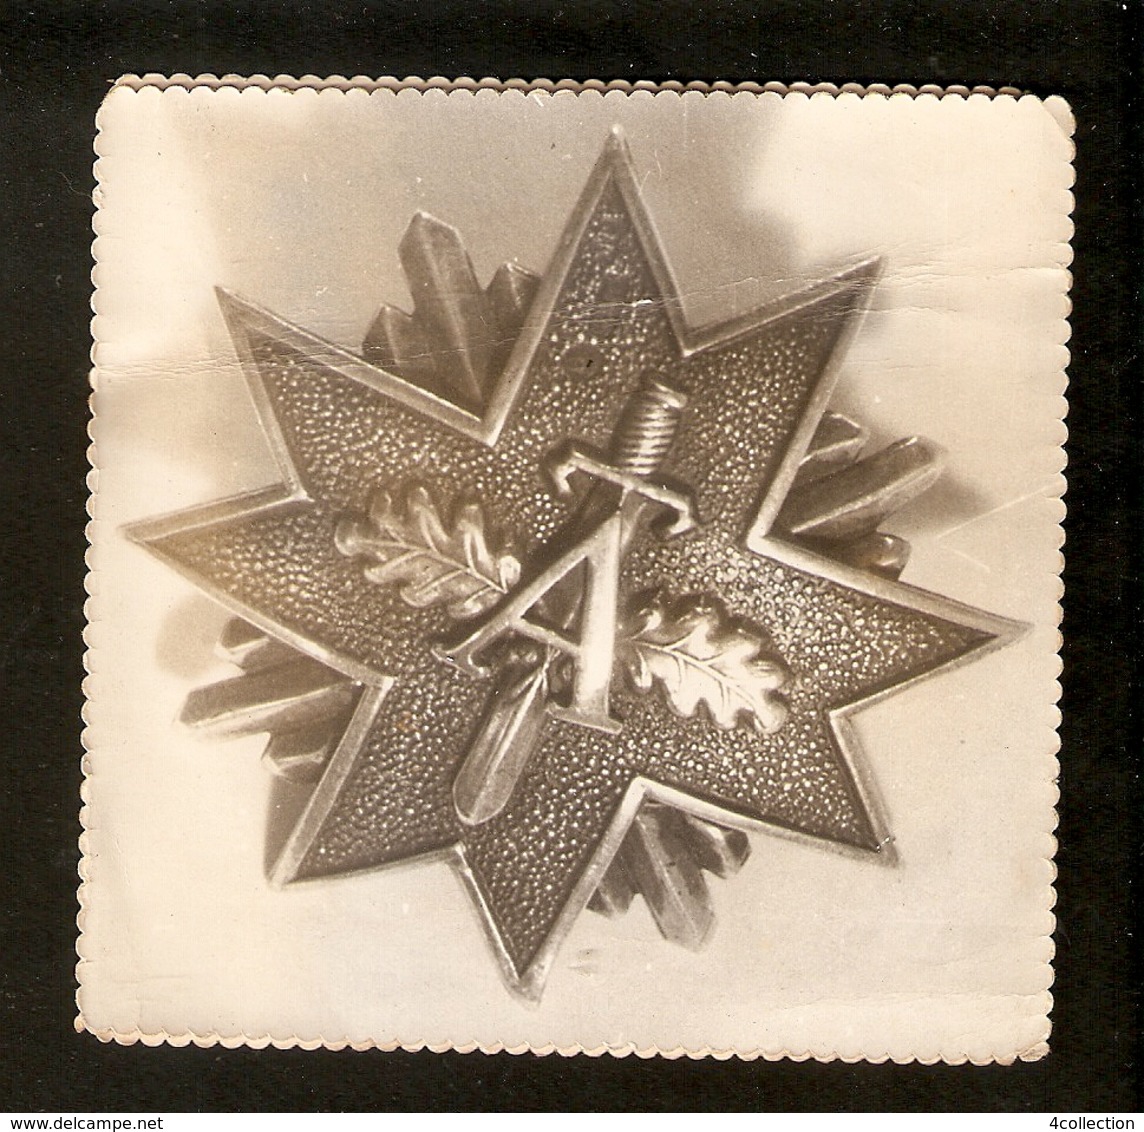 K Old 2 Photos Latvia Pin Badge Order Medal Protecting Guard Distinction Distinctive Sign Letter A Sword Oak Leaves - Photographs